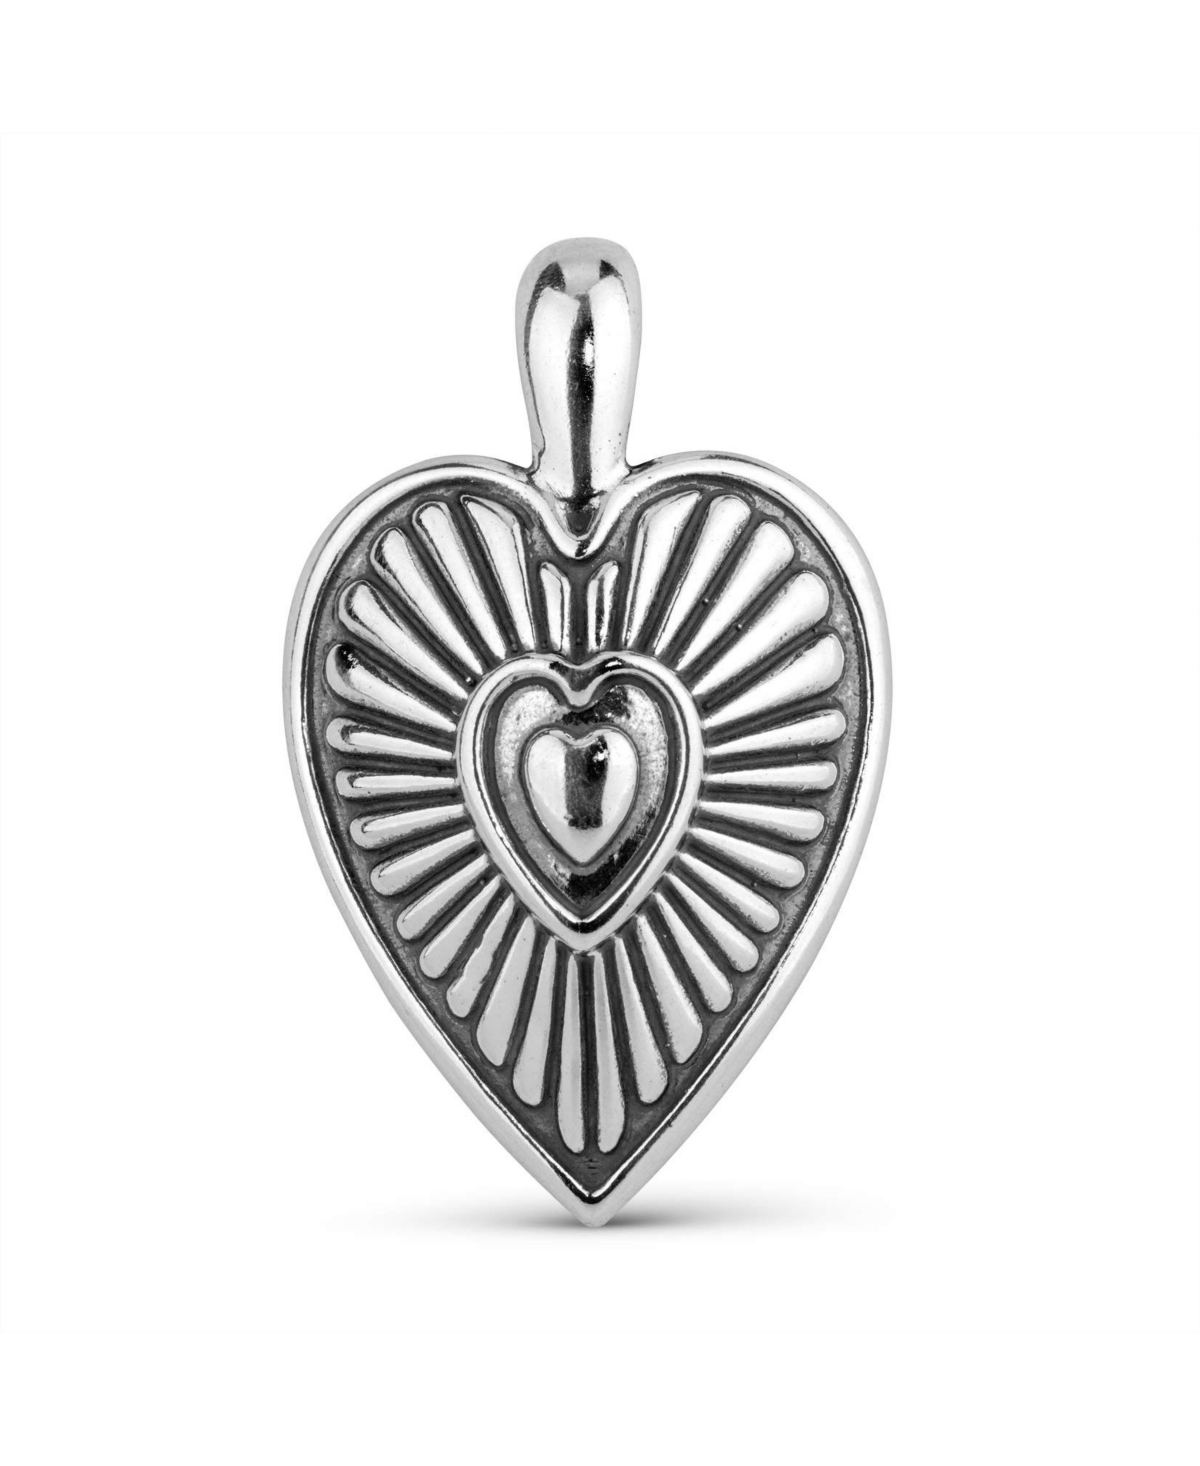 Sterling Silver Women's Pendant Enhancer, Heart and Sunburst Design - Sterling silver